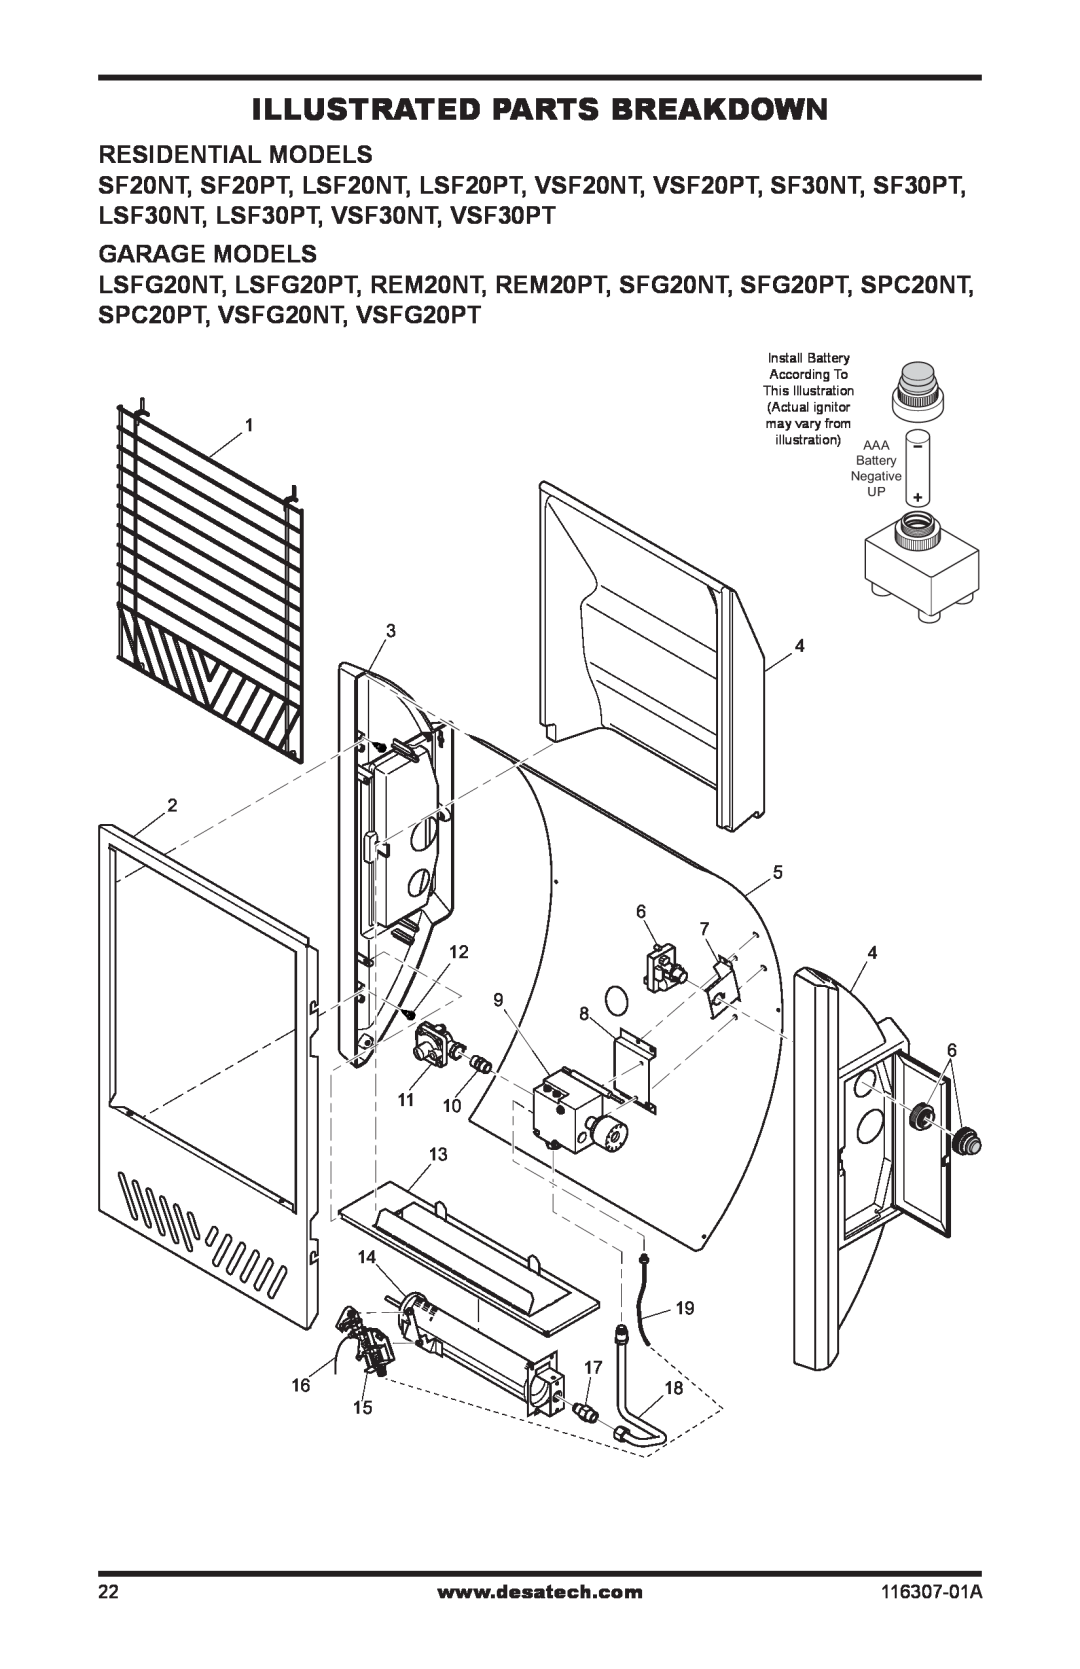 Desa SF20NT installation manual Illustrated Parts Breakdown, Residential Models, Garage Models 